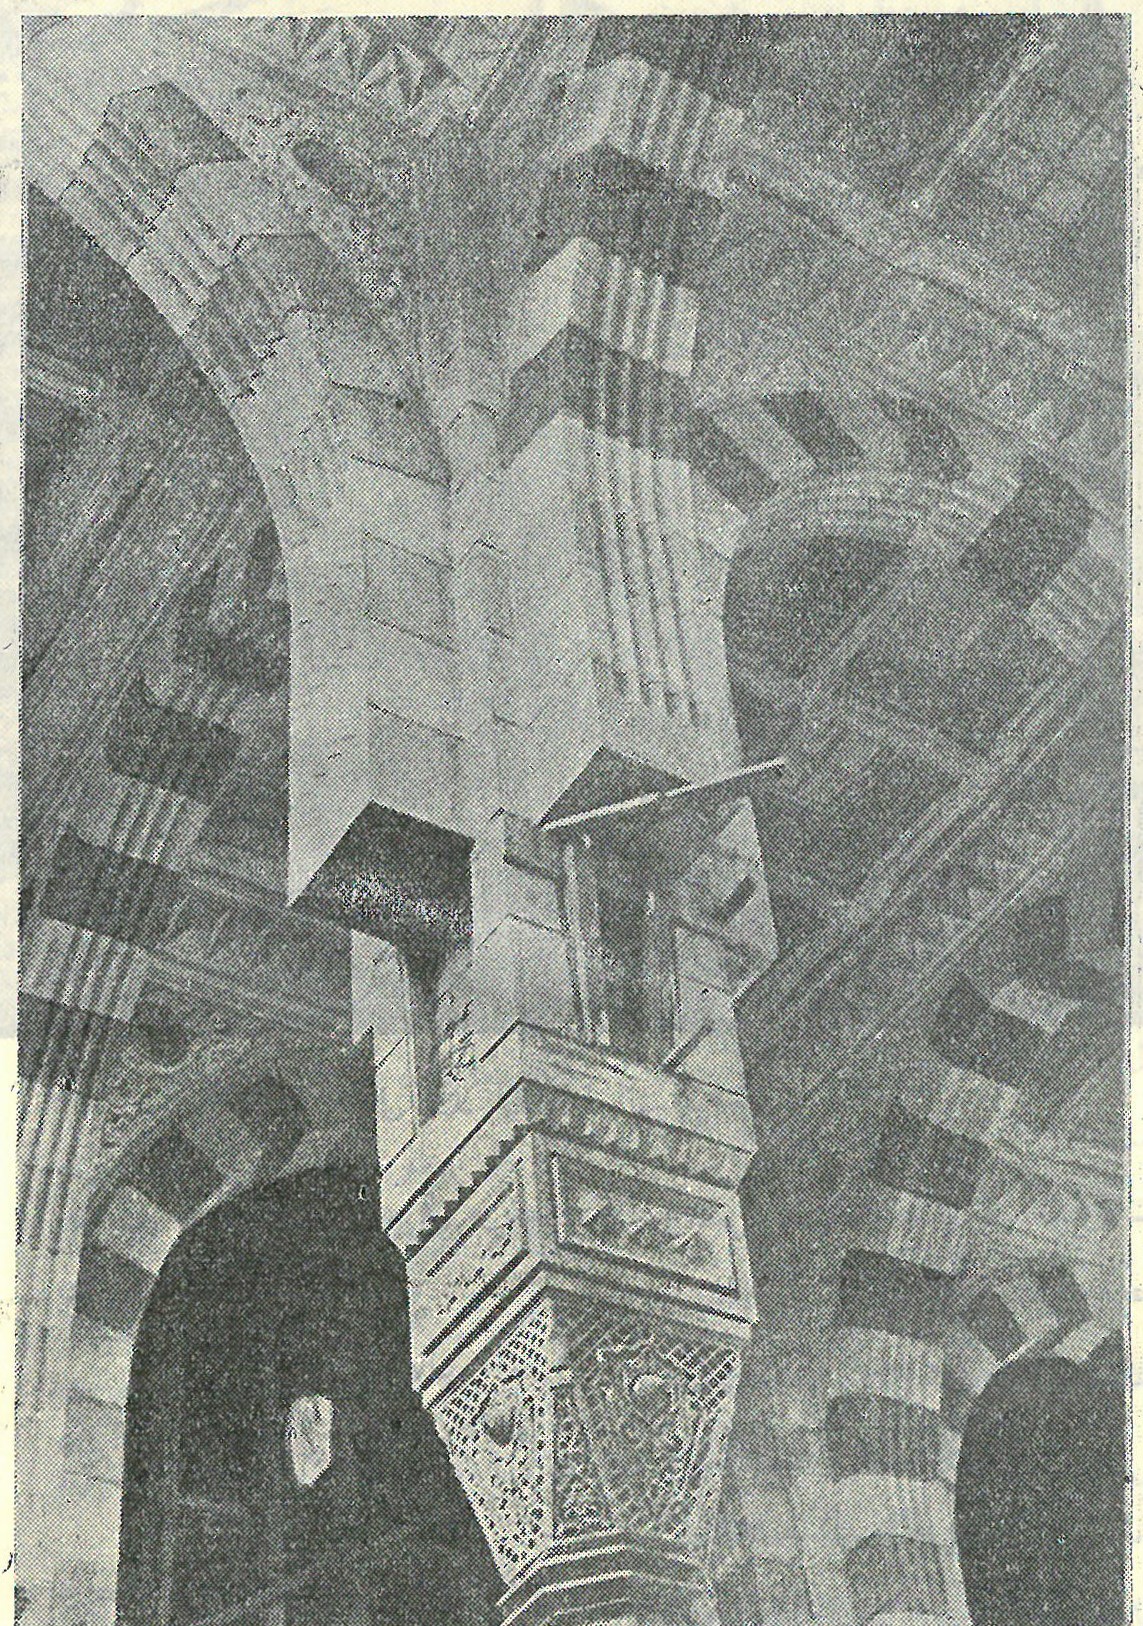 The Prophet's Mosque in Madinah 1954